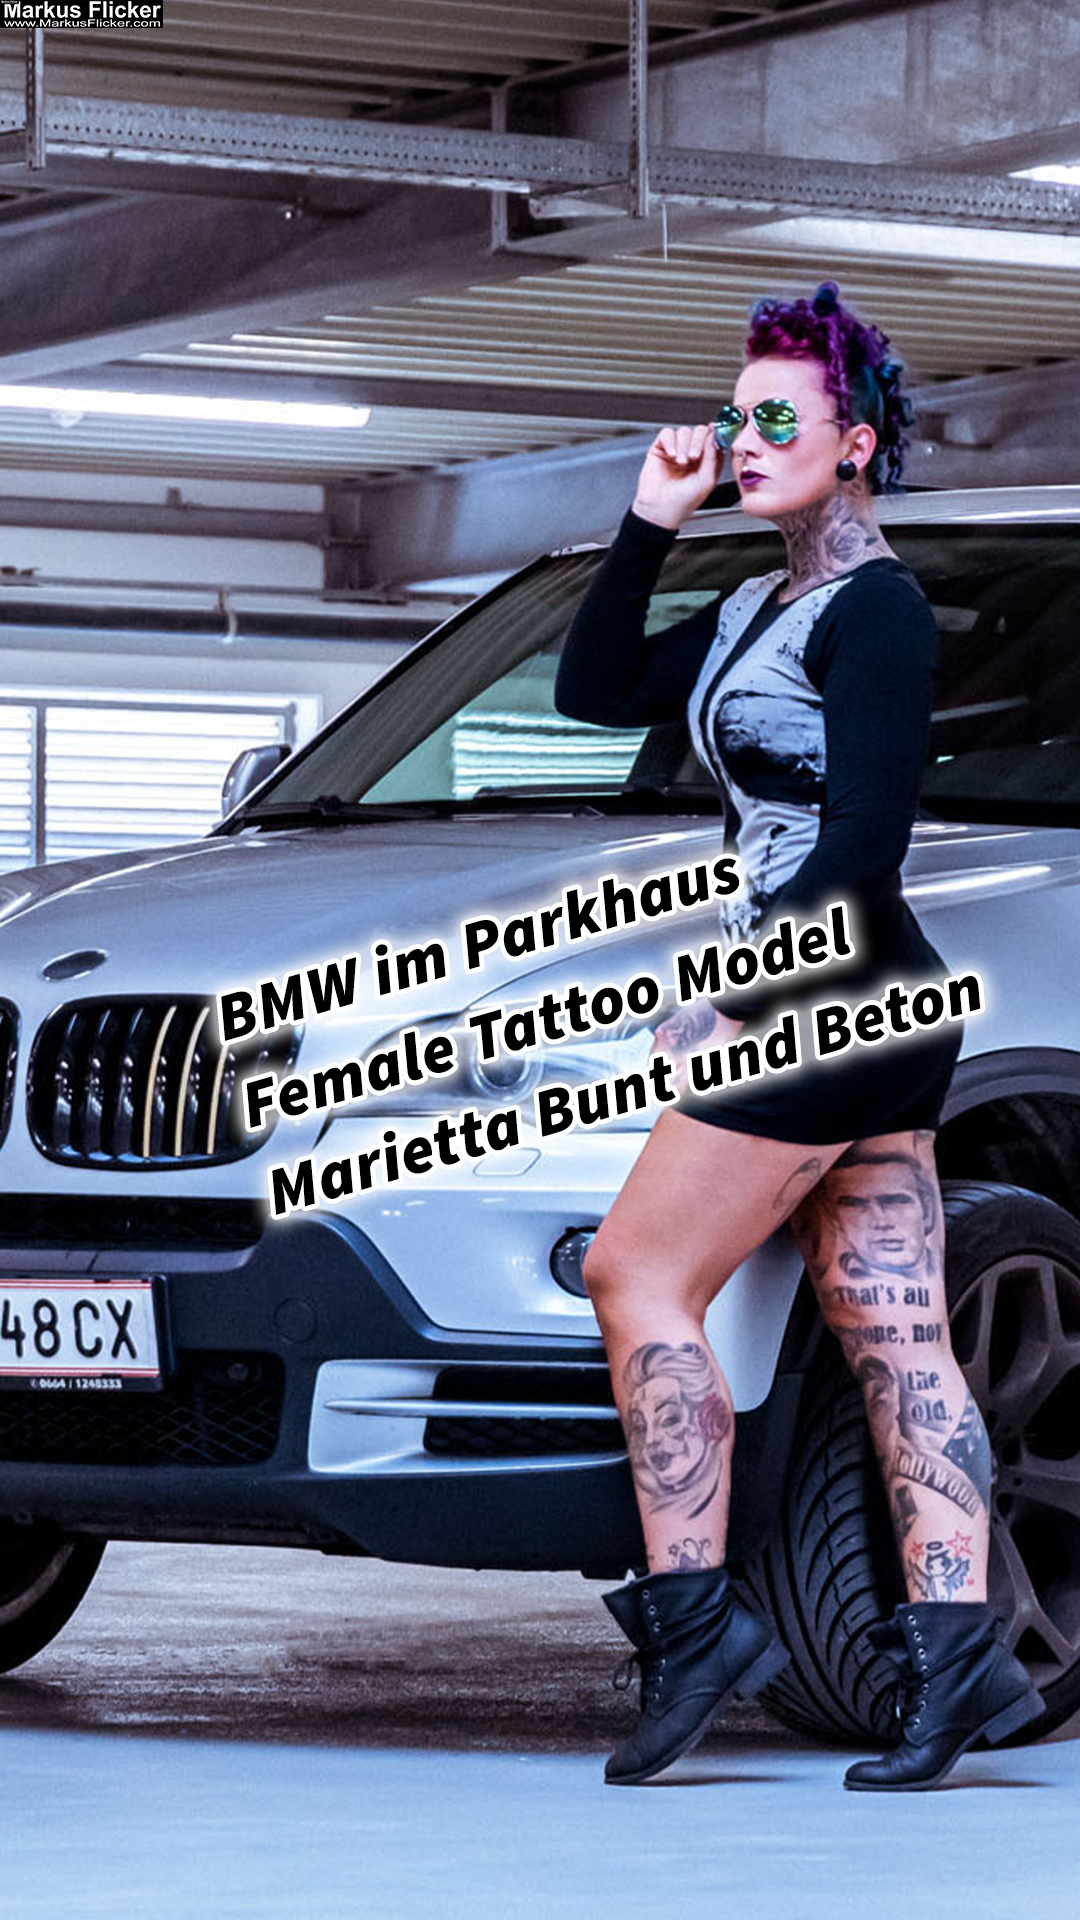 BMW SUV Parkhaus Female Tattoo Model Marietta buntes Shirt und Beton